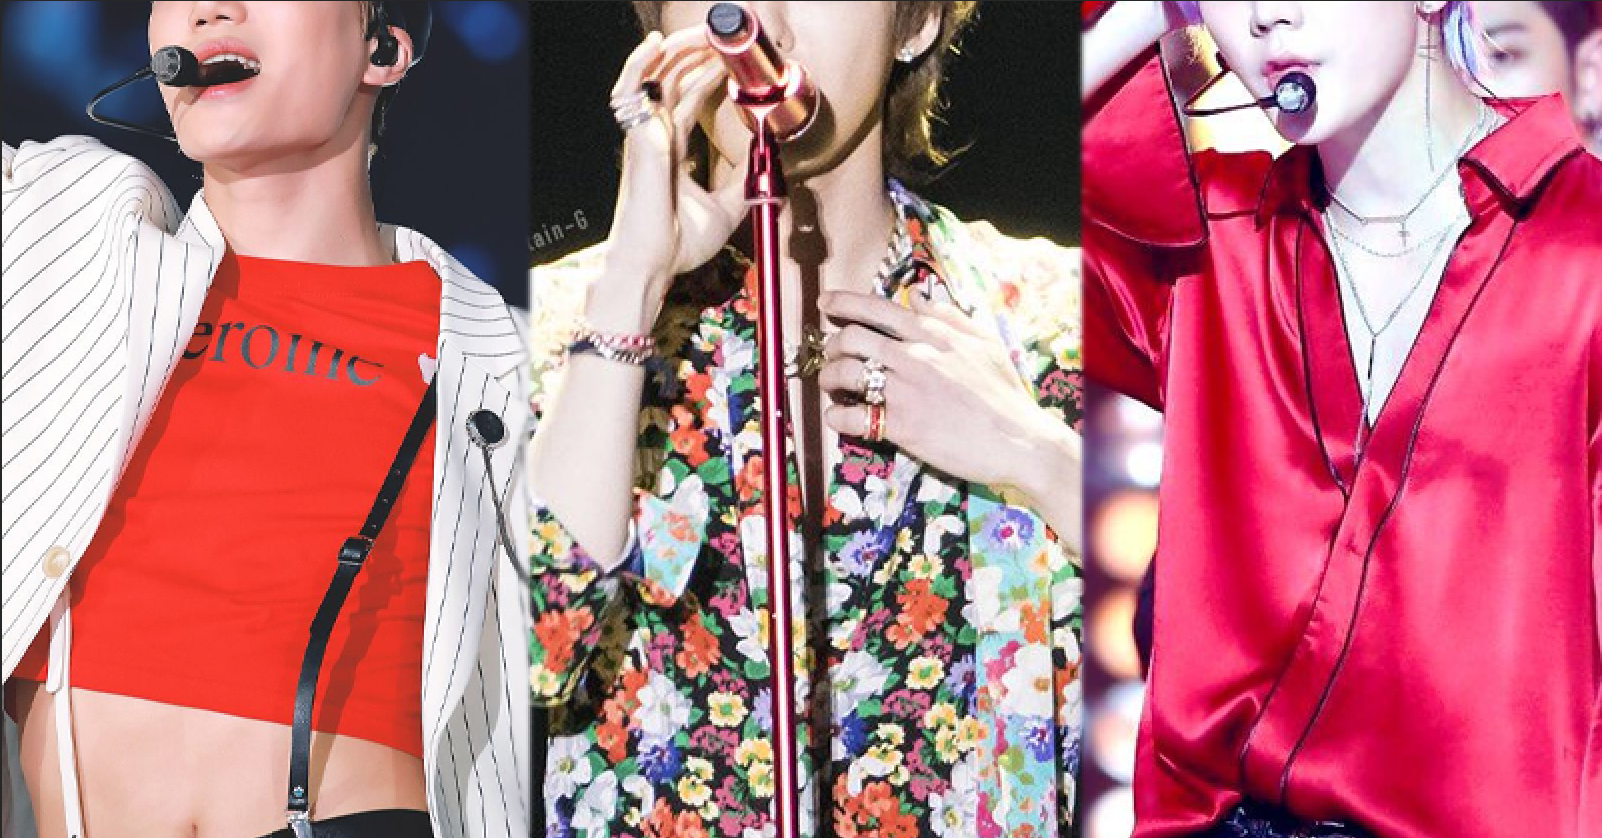 Top 9 K-pop Idols Who Shuts Gender Stereotypes With Genderless Image